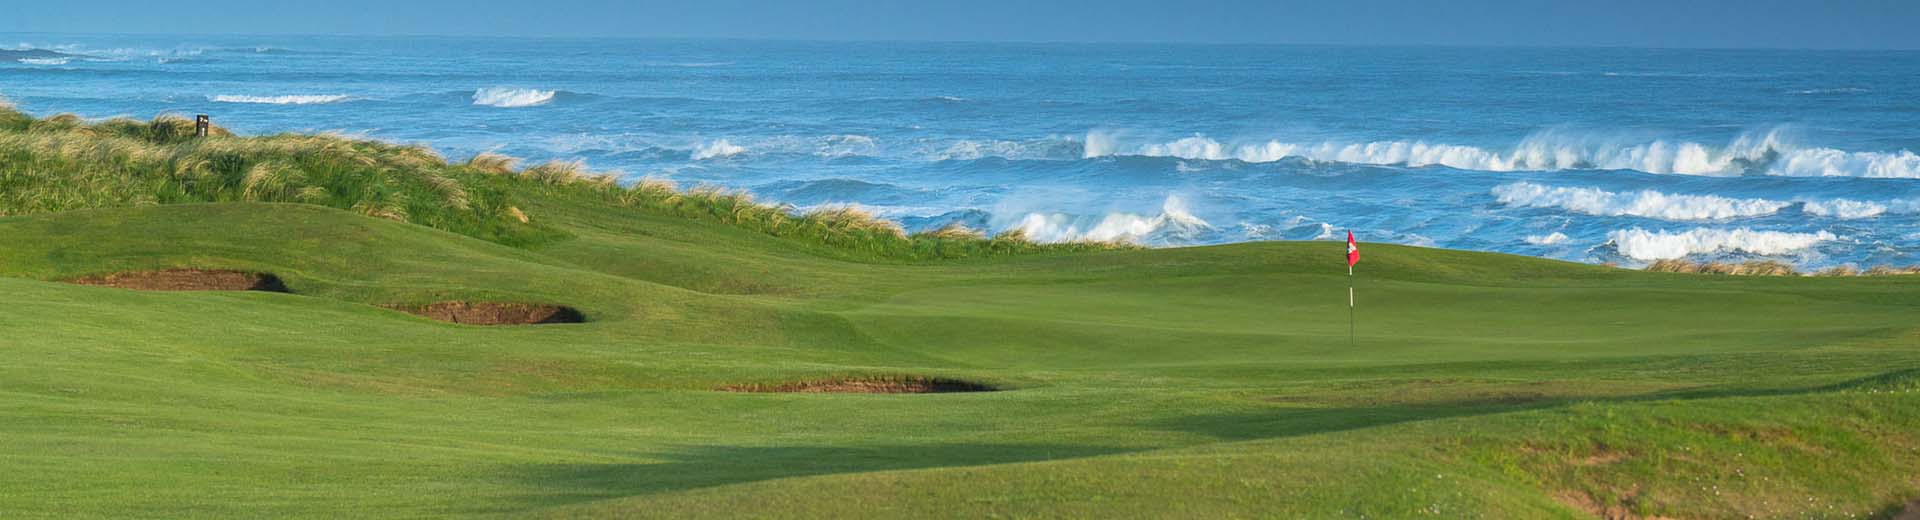 Golf course with flag and ocean coast